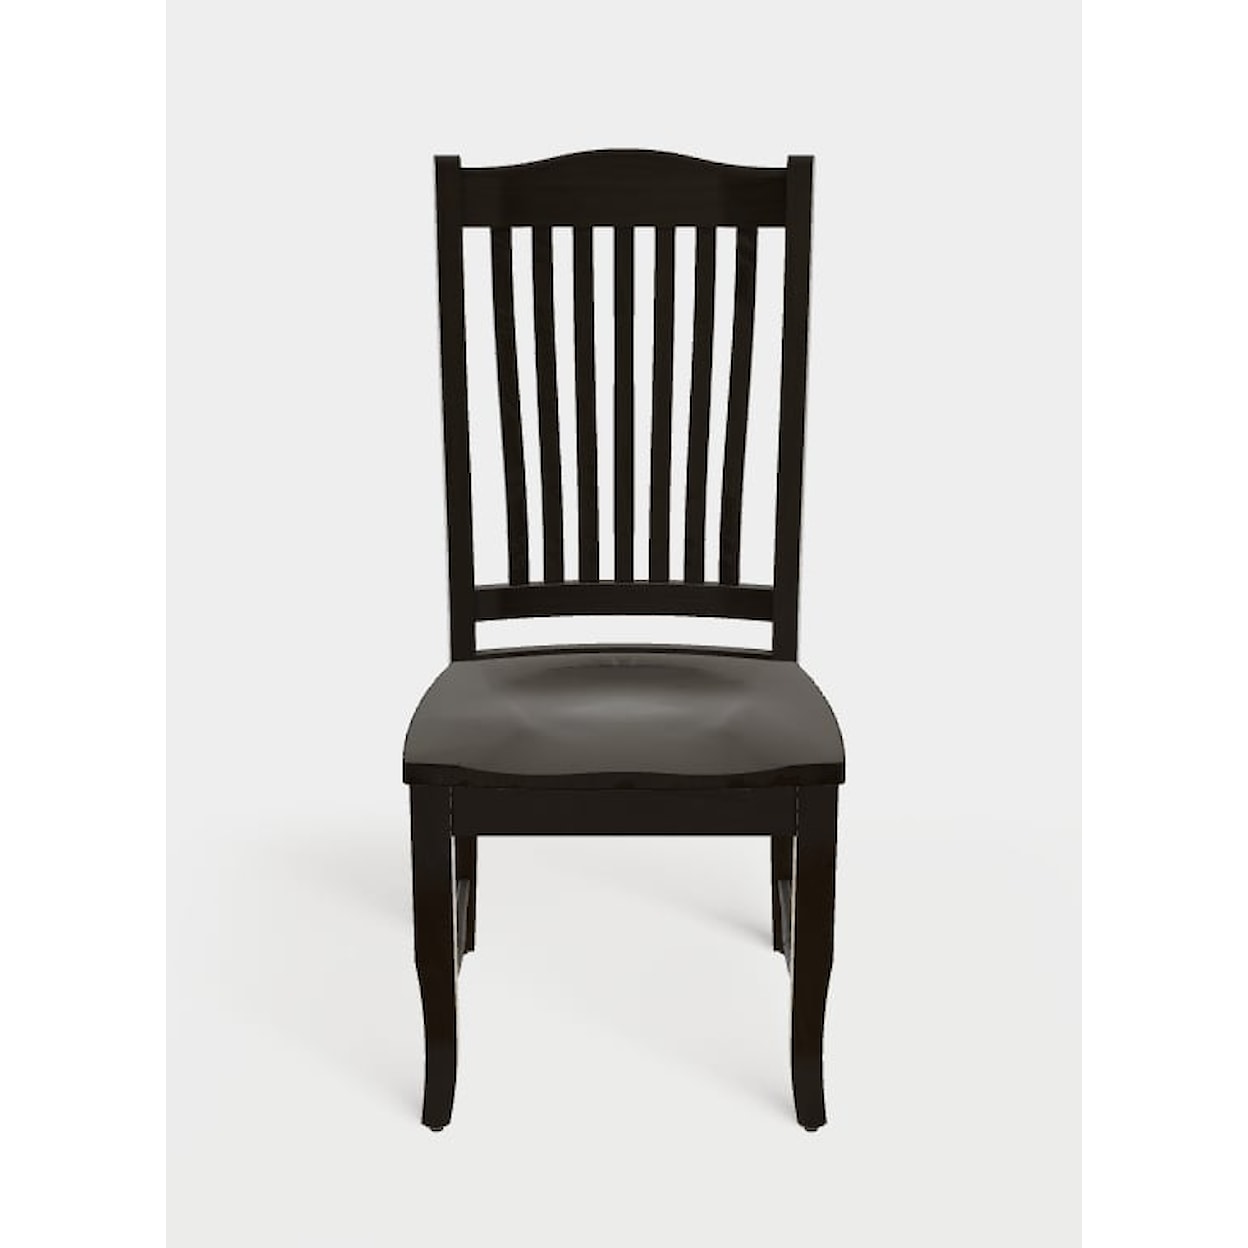 MAVIN Jackson Customizable Jackson Dining Chair/Barstool